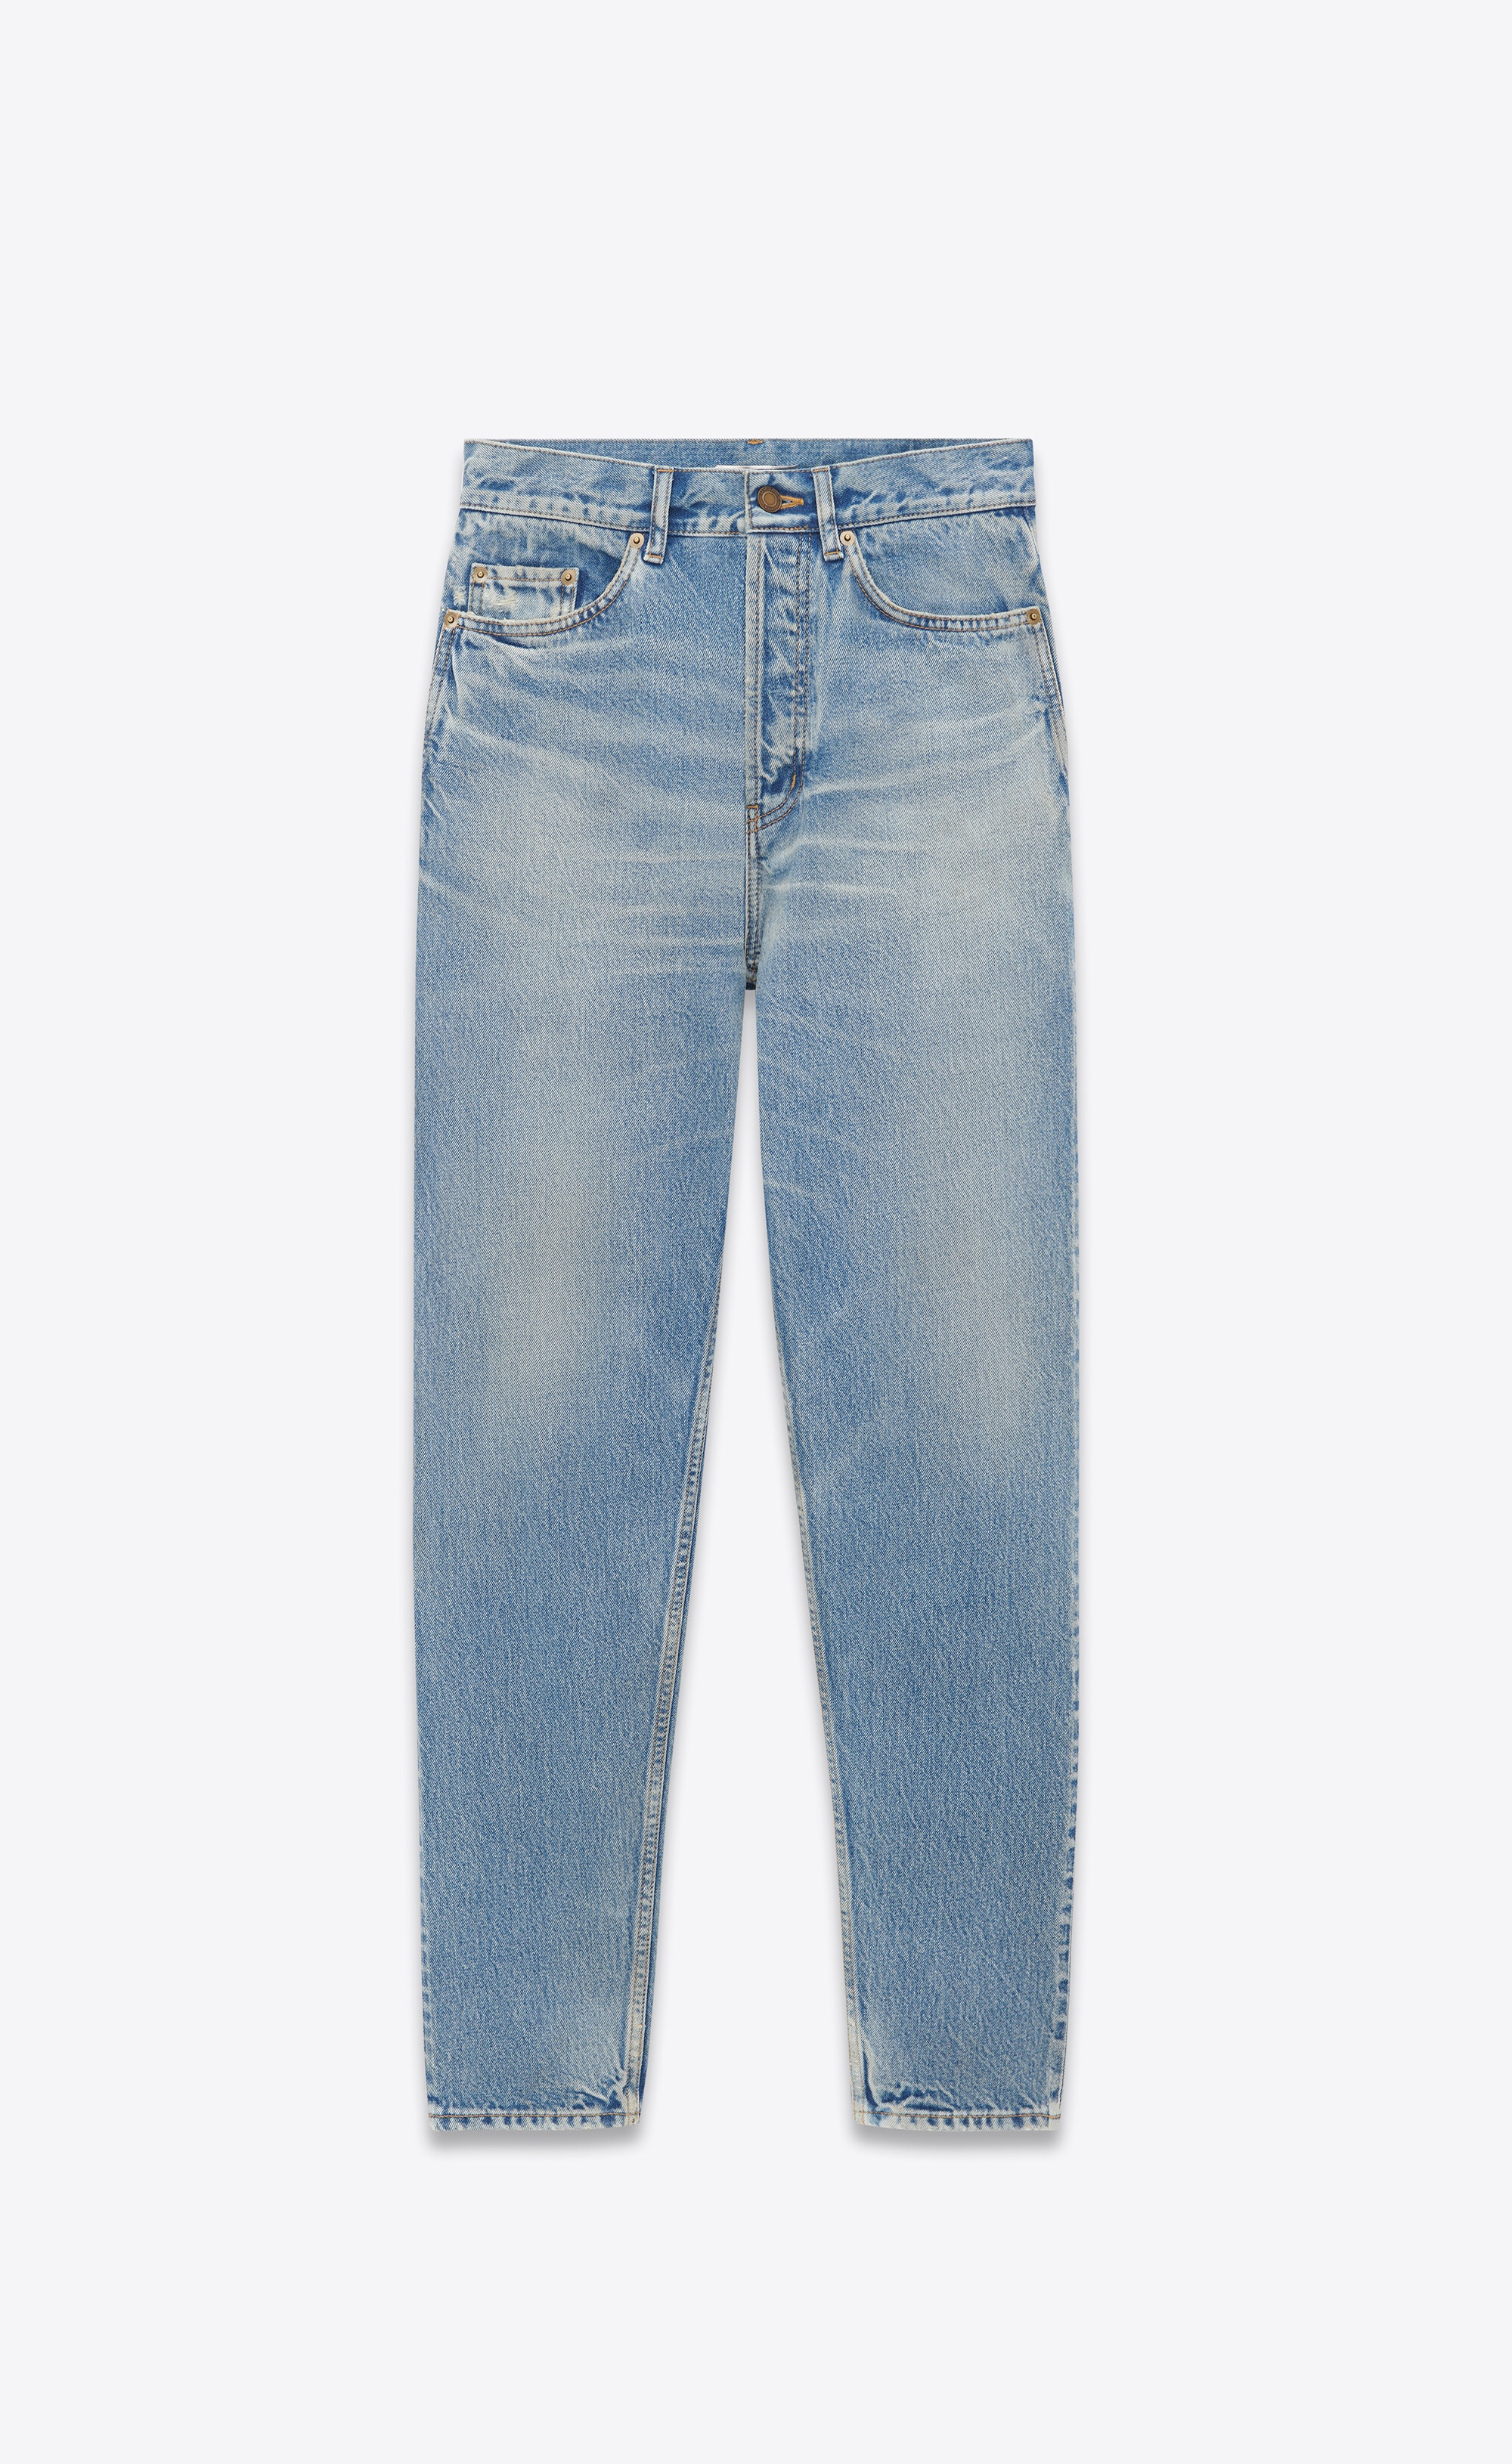 cropped jeans in sunny sky blue denim - 1